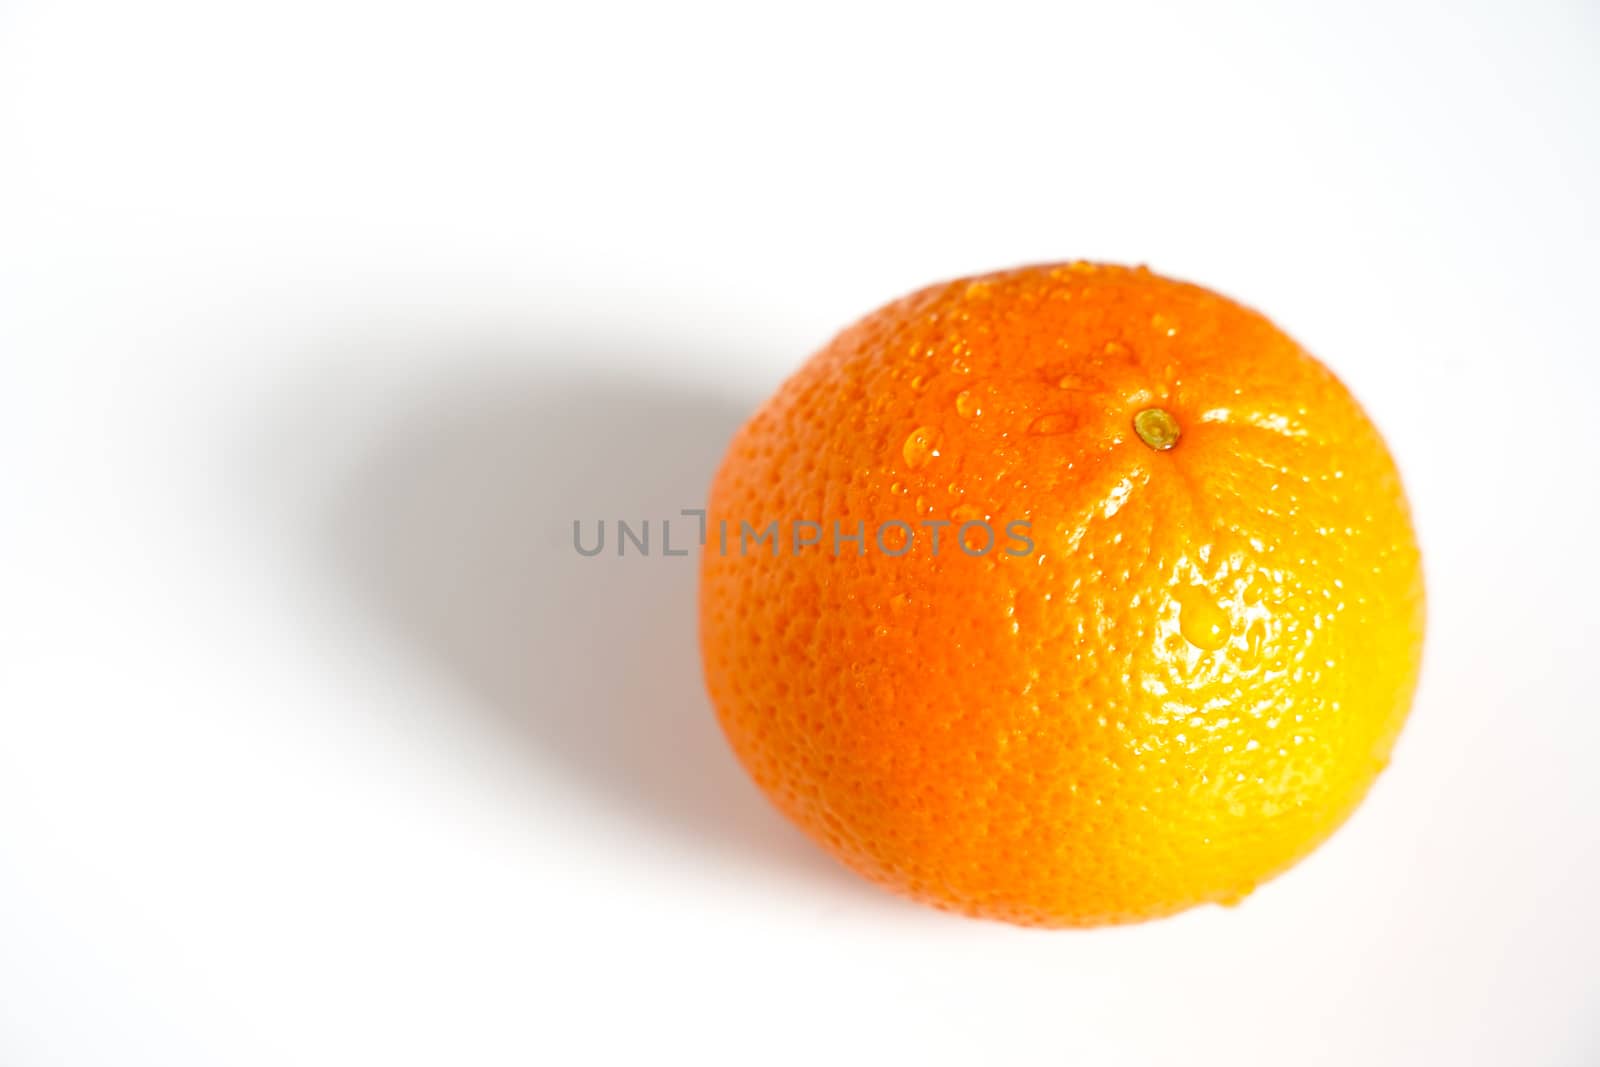 A Whole Orange by samULvisuals